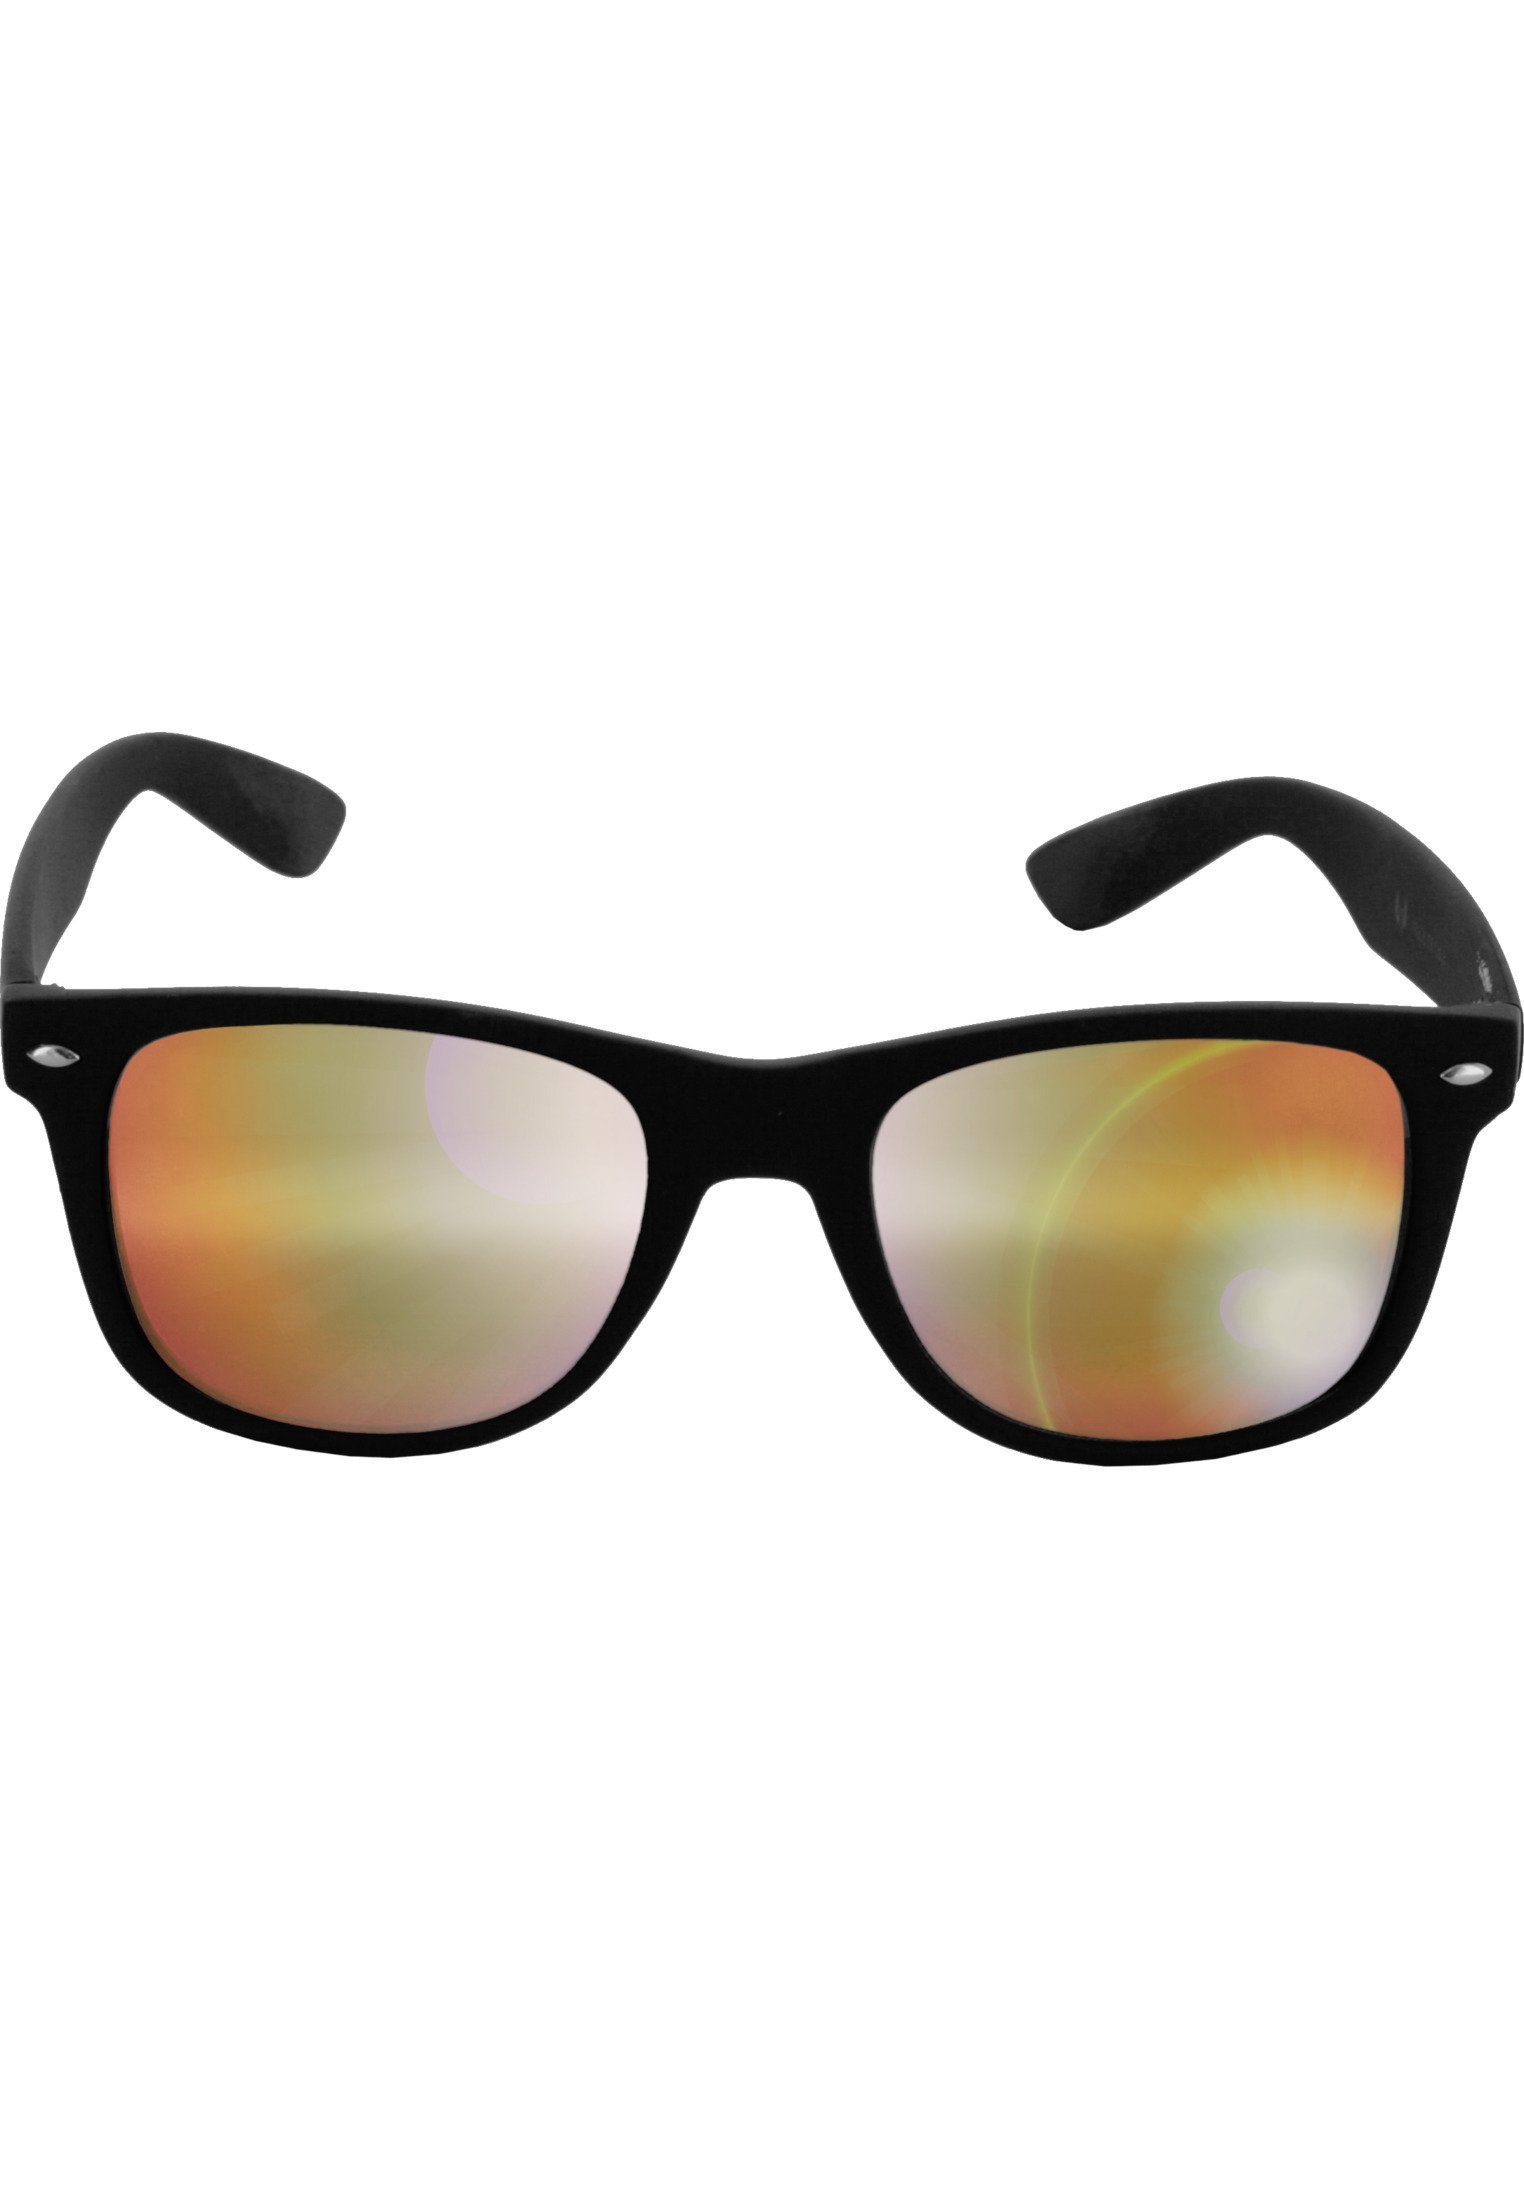 Sonnenbrille blk/orange MSTRDS Likoma Accessoires Mirror Sunglasses